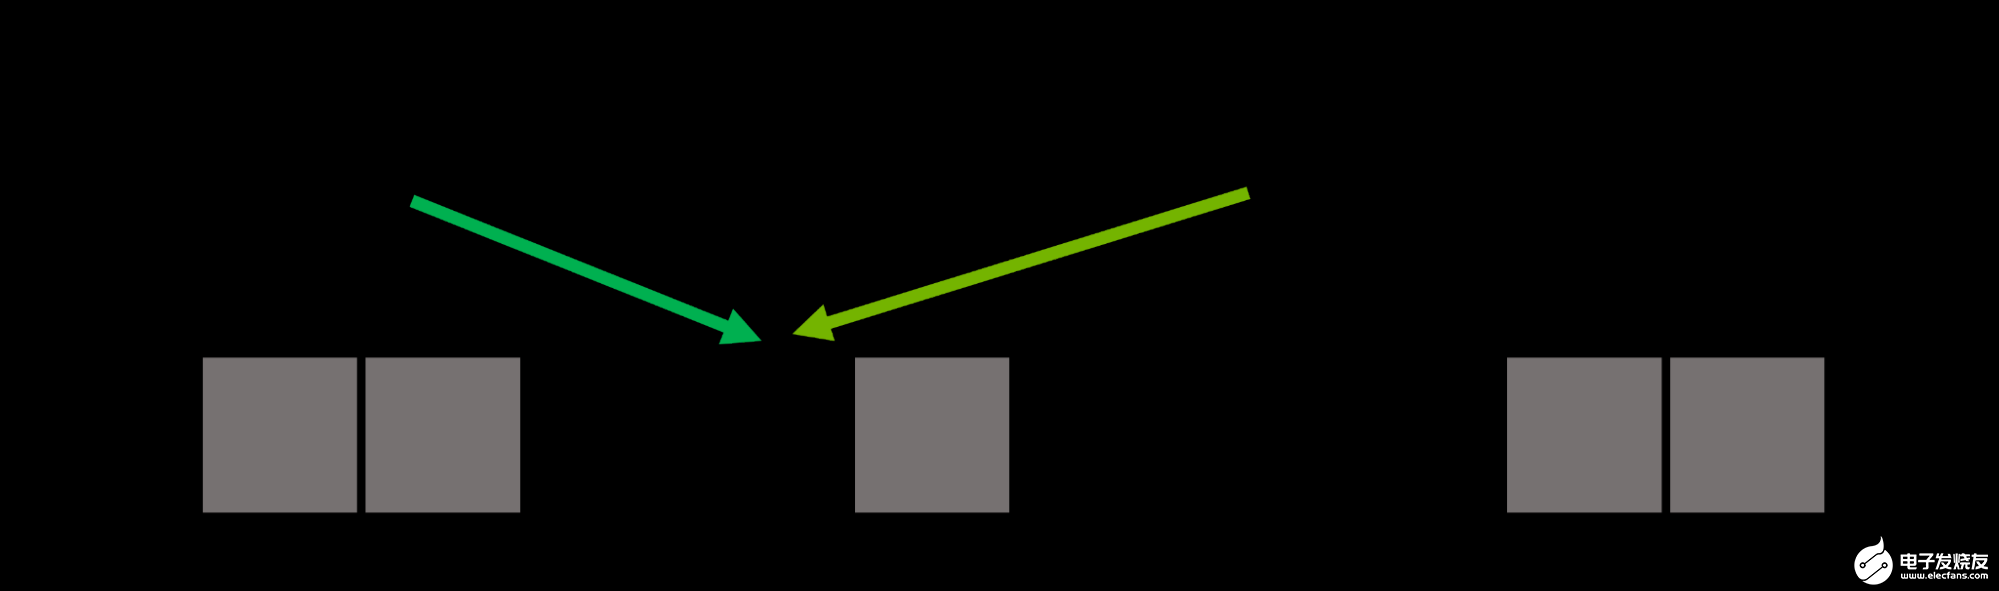 hash-collision-diagram.png